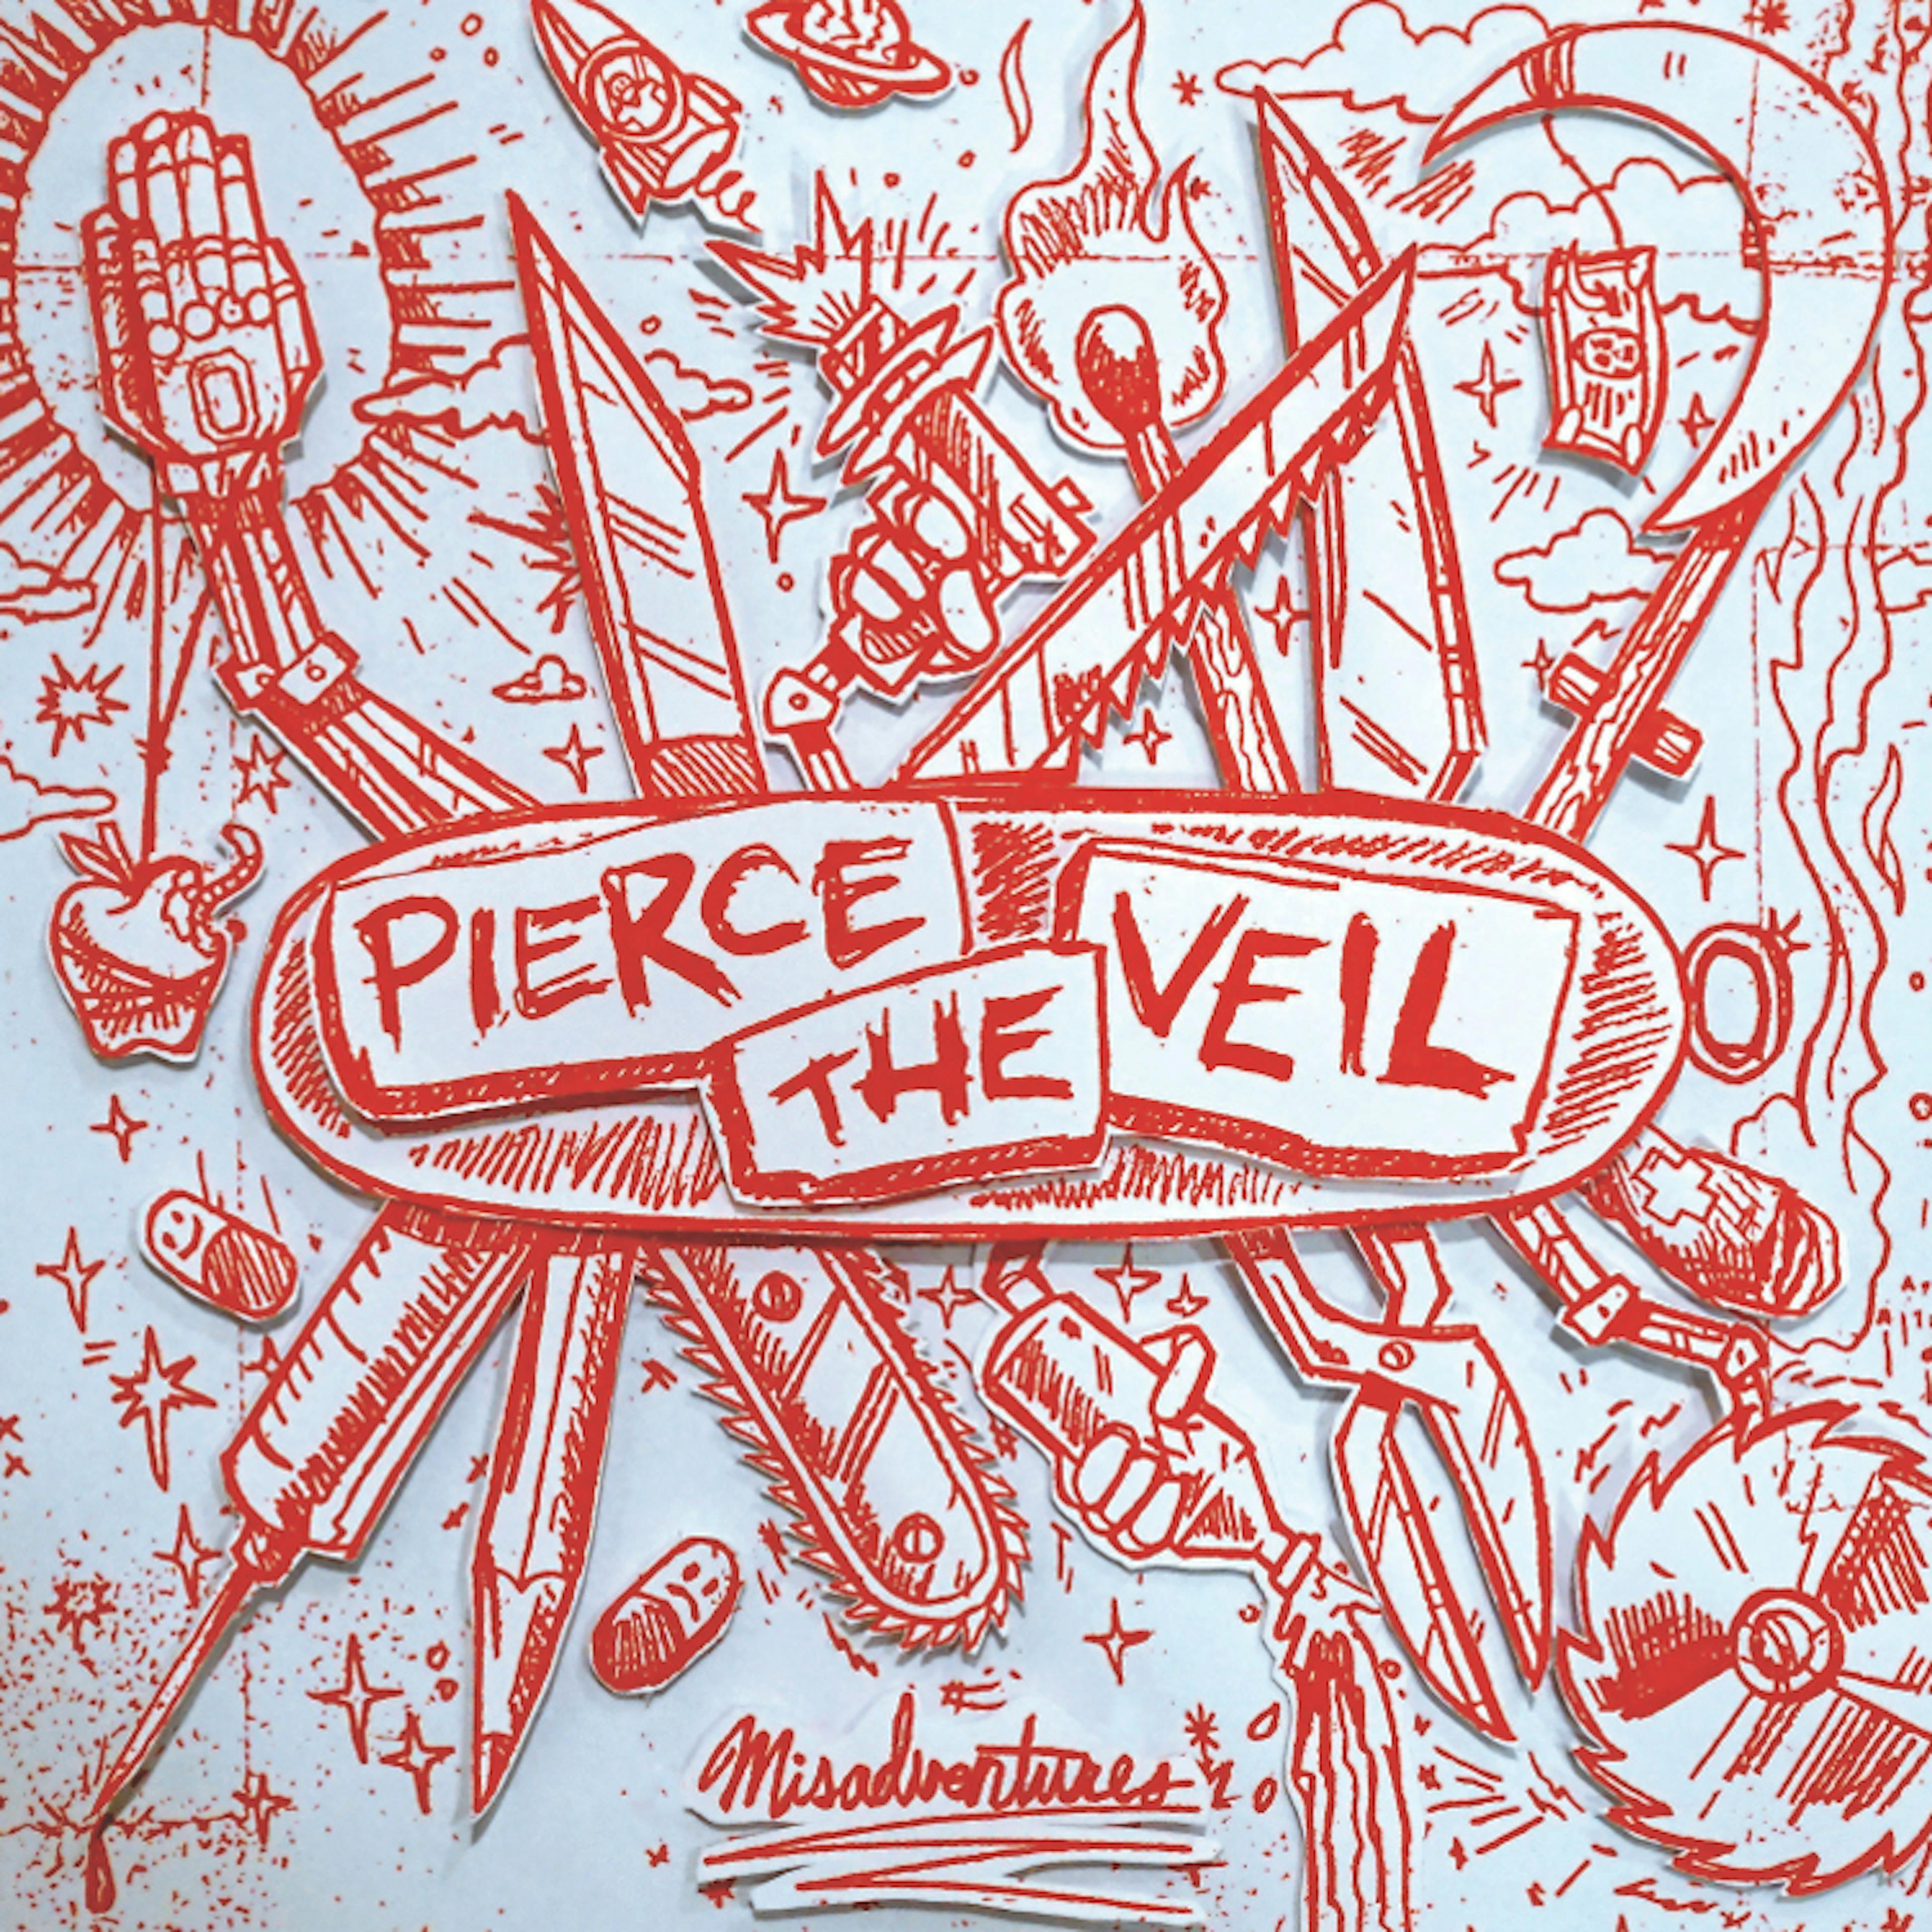 Pierce The Veil Confirm New Album, Misadventures